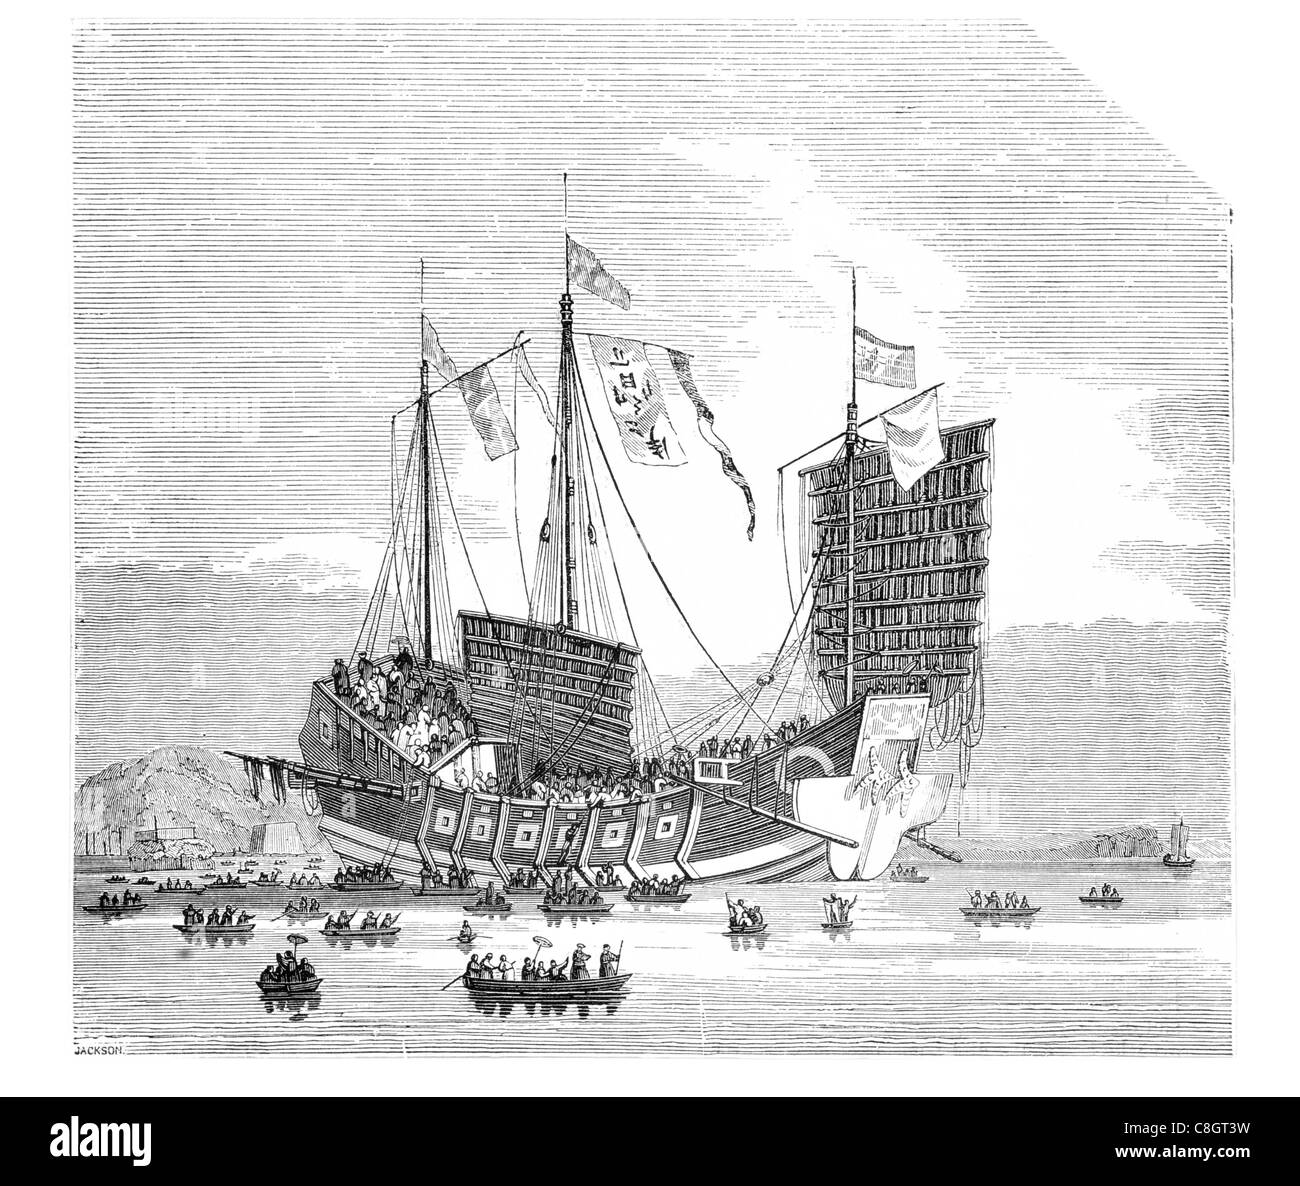 Chinesen Handel Junk-alte chinesische Schiff Dschunken Han Dynastie Asien Ozean Reise Hongkong Junk-manipuliert Segelboot segeln Stockfoto